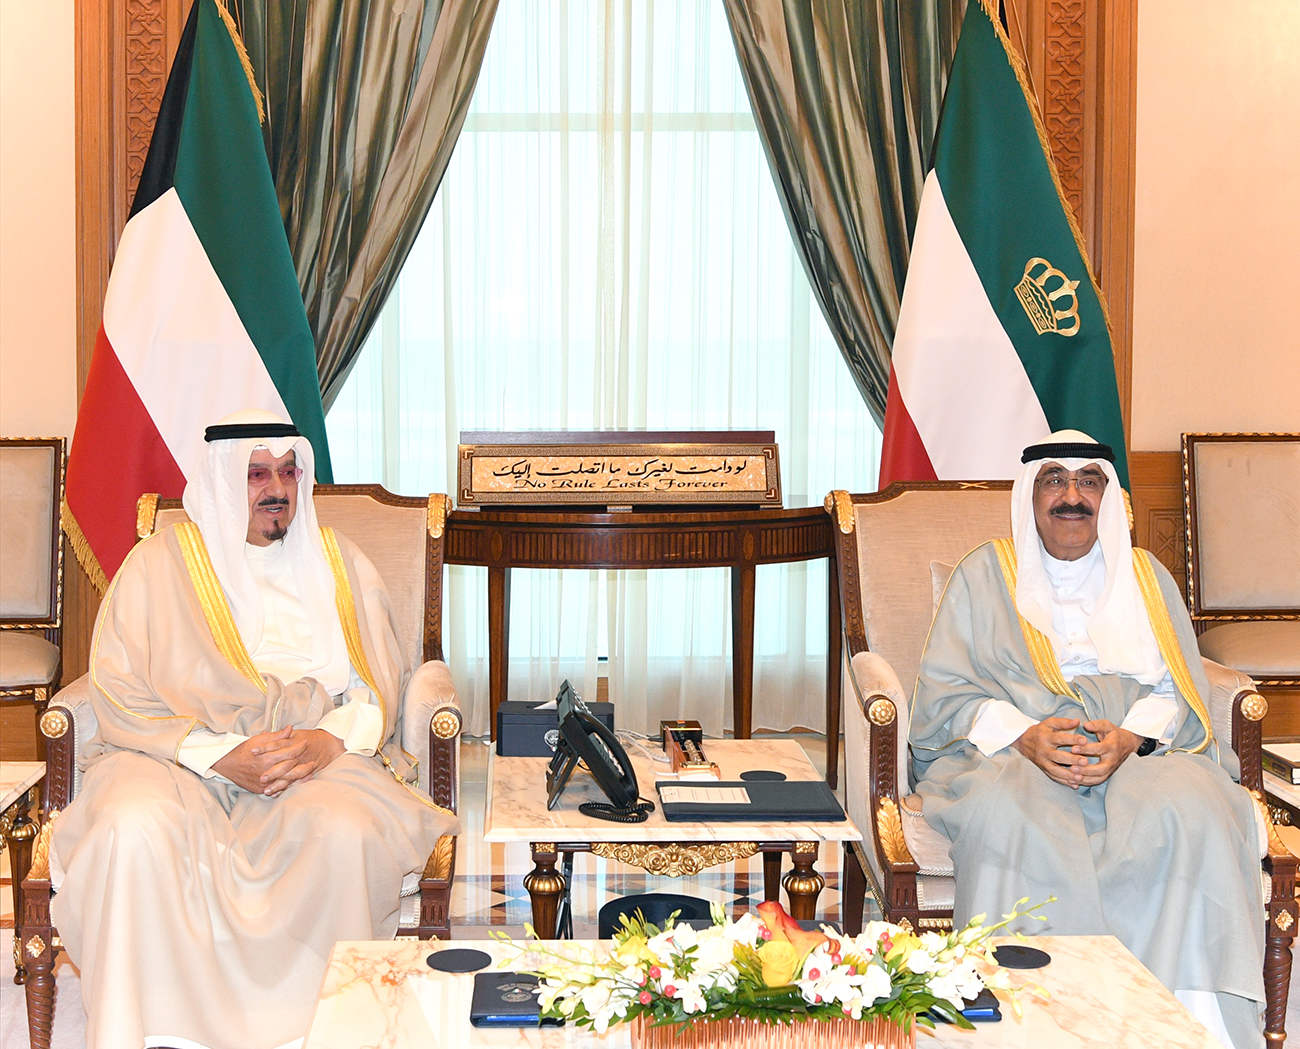 His Highness the Amir Sheikh Meshal Al-Ahmad Al-Jaber Al-Sabah receives His Highness the Prime Minister Sheikh Ahmad Abdullah Al-Ahmad Al-Sabah